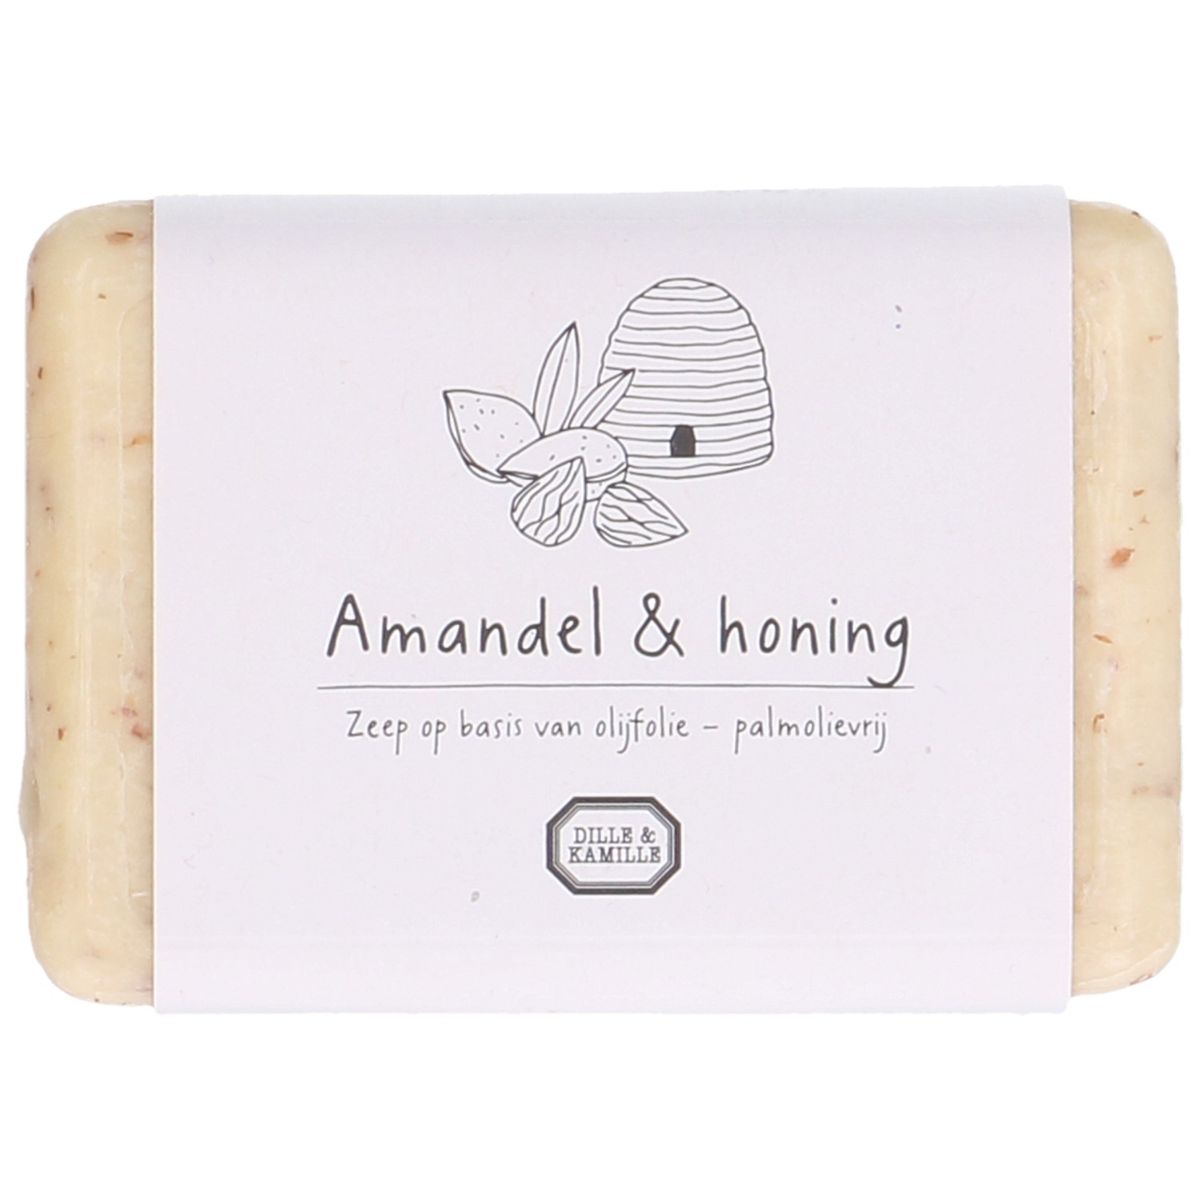 amandel & honing, 150 | bij Dille & Kamille